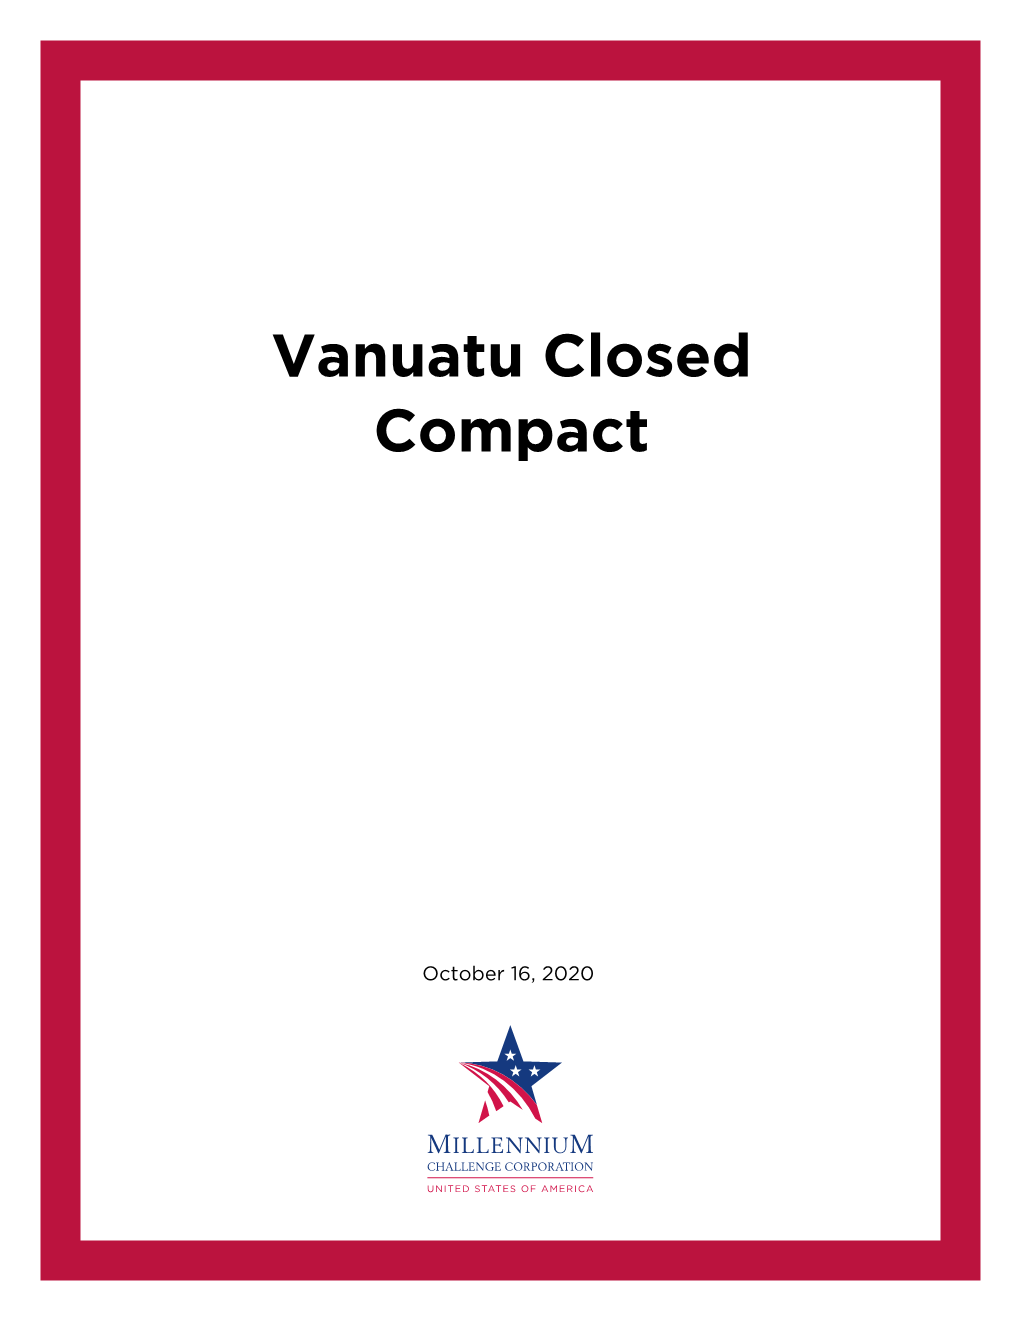 Vanuatu Closed Compact